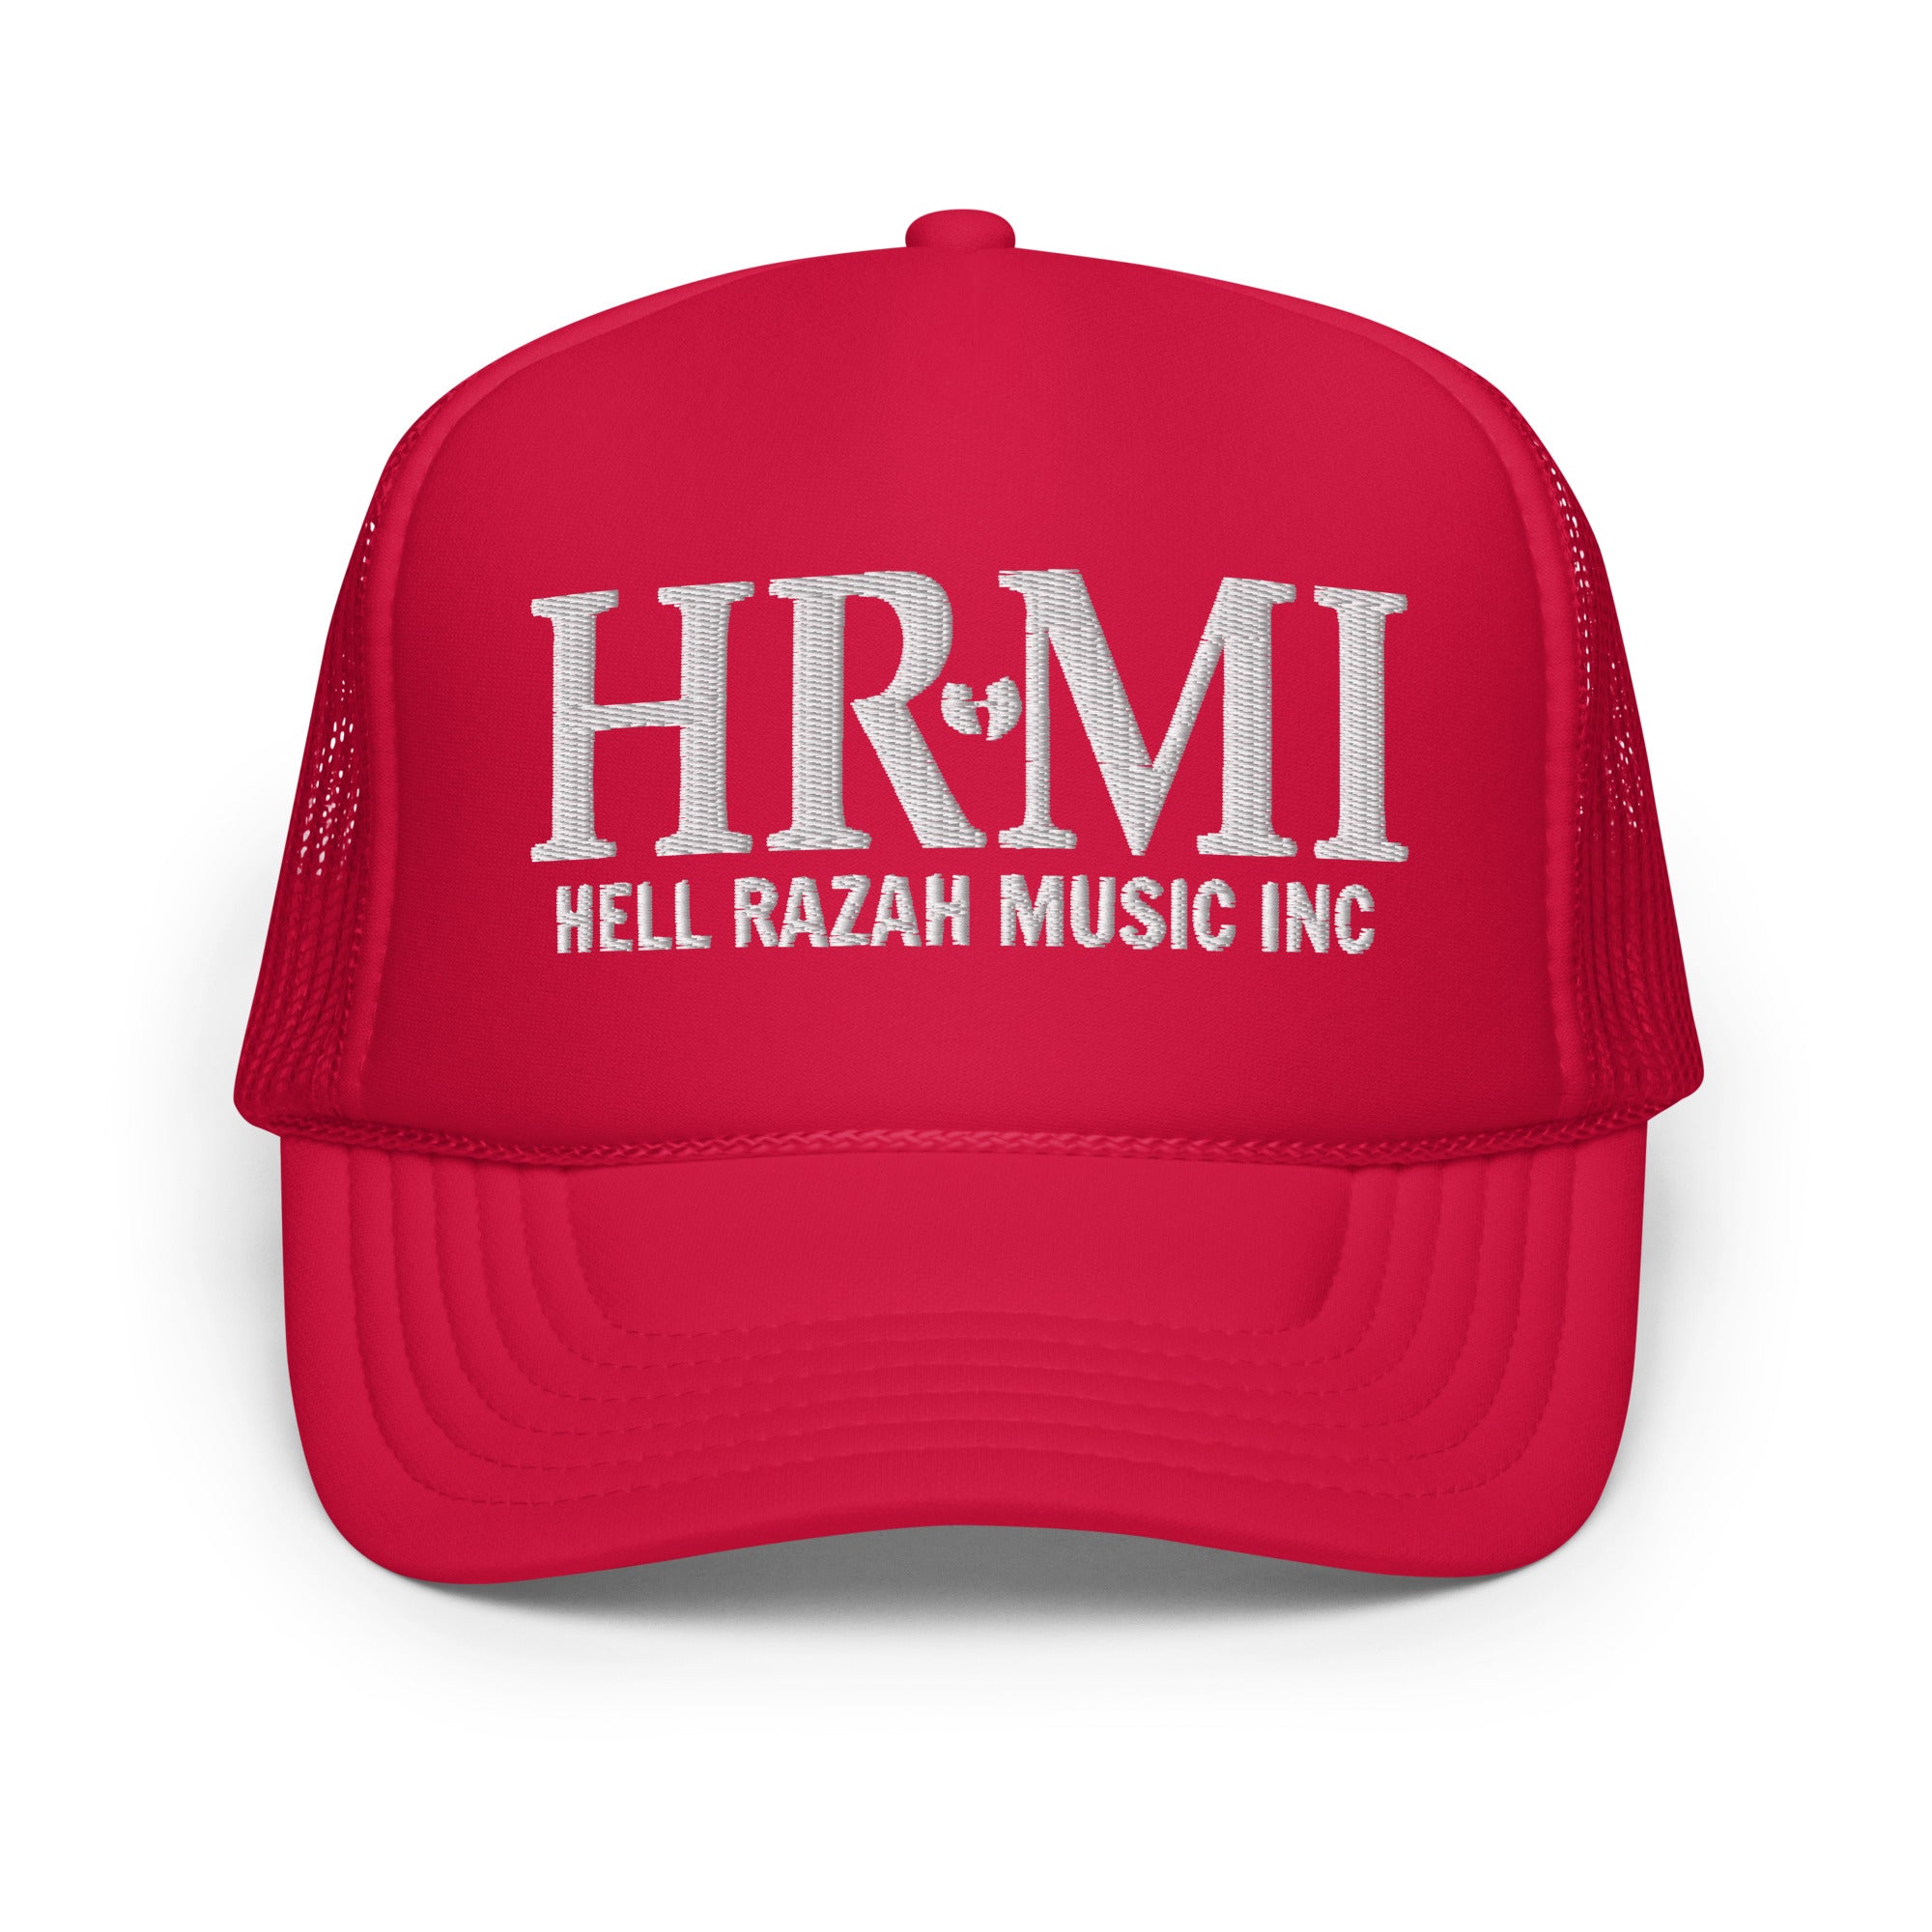 HRMI Embroidered Foam Trucker Cap